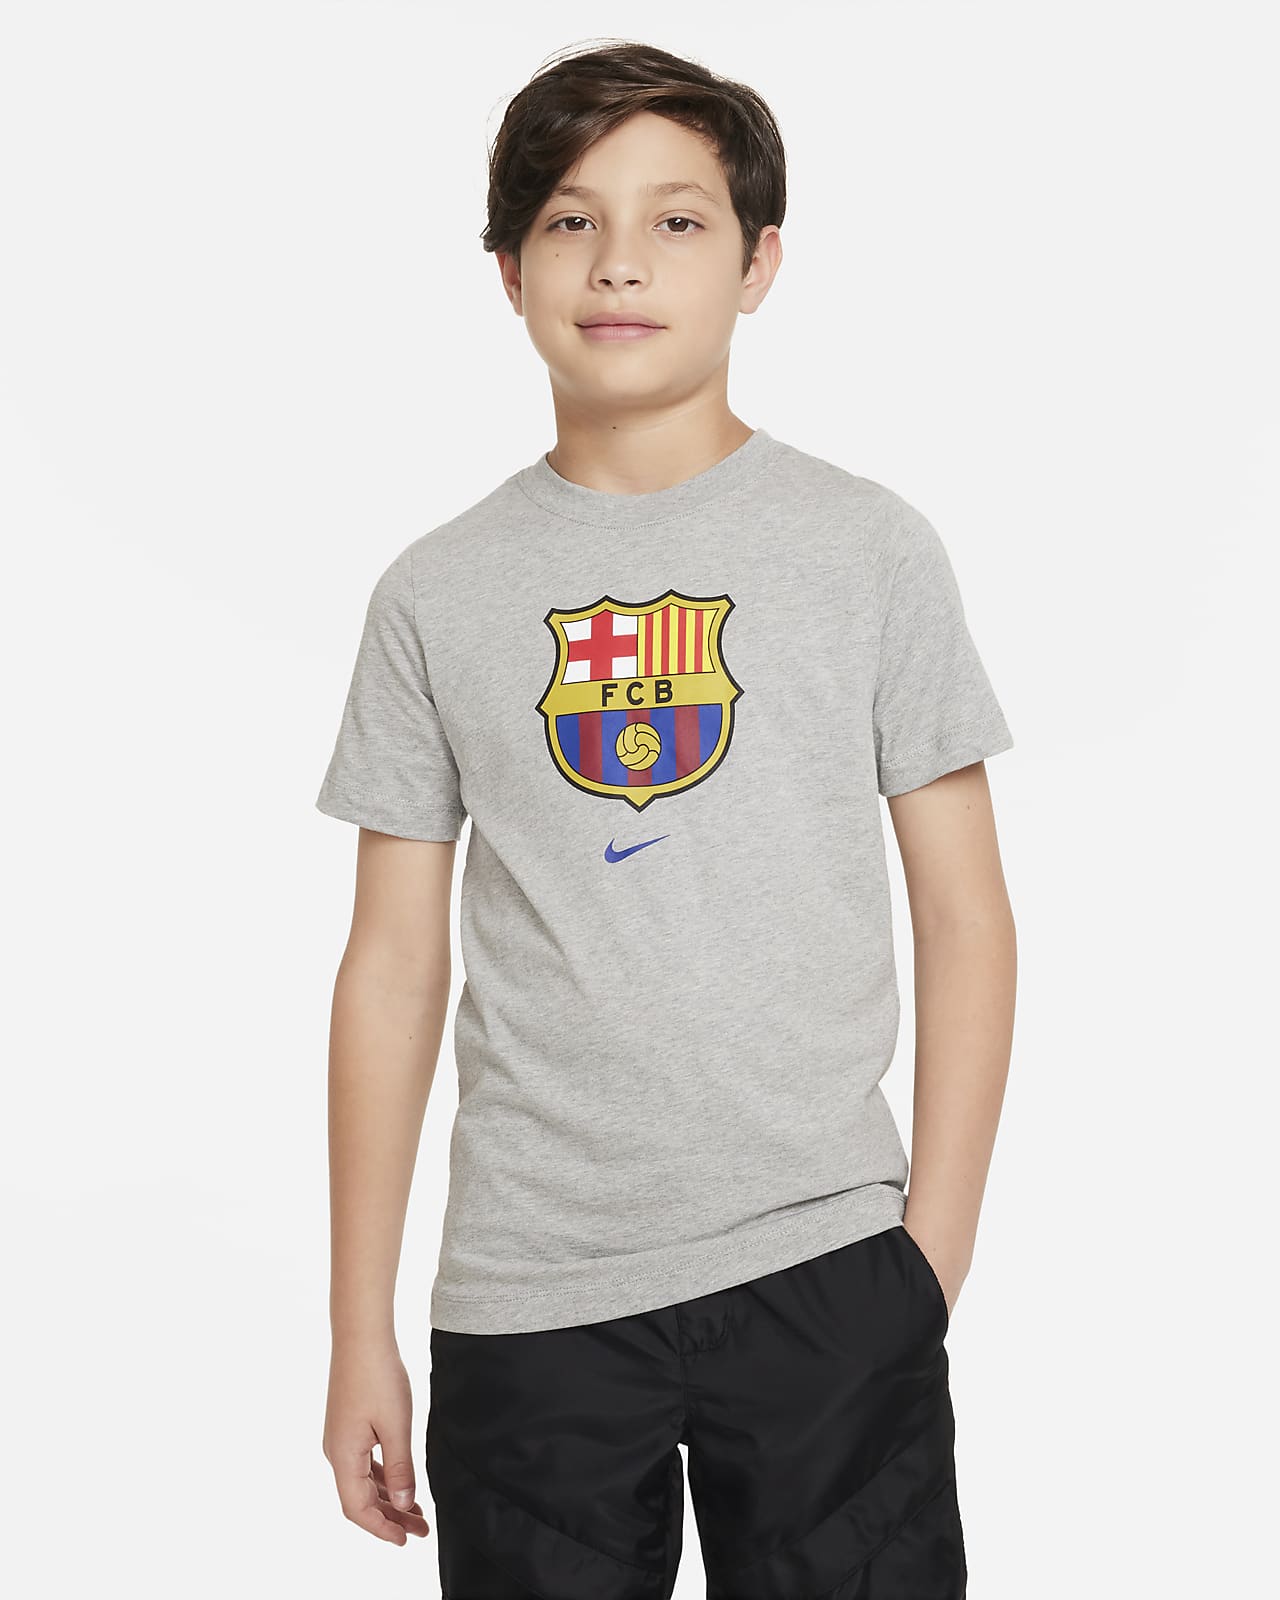 FC Barcelona Crest Samarreta Nike - Nen/a